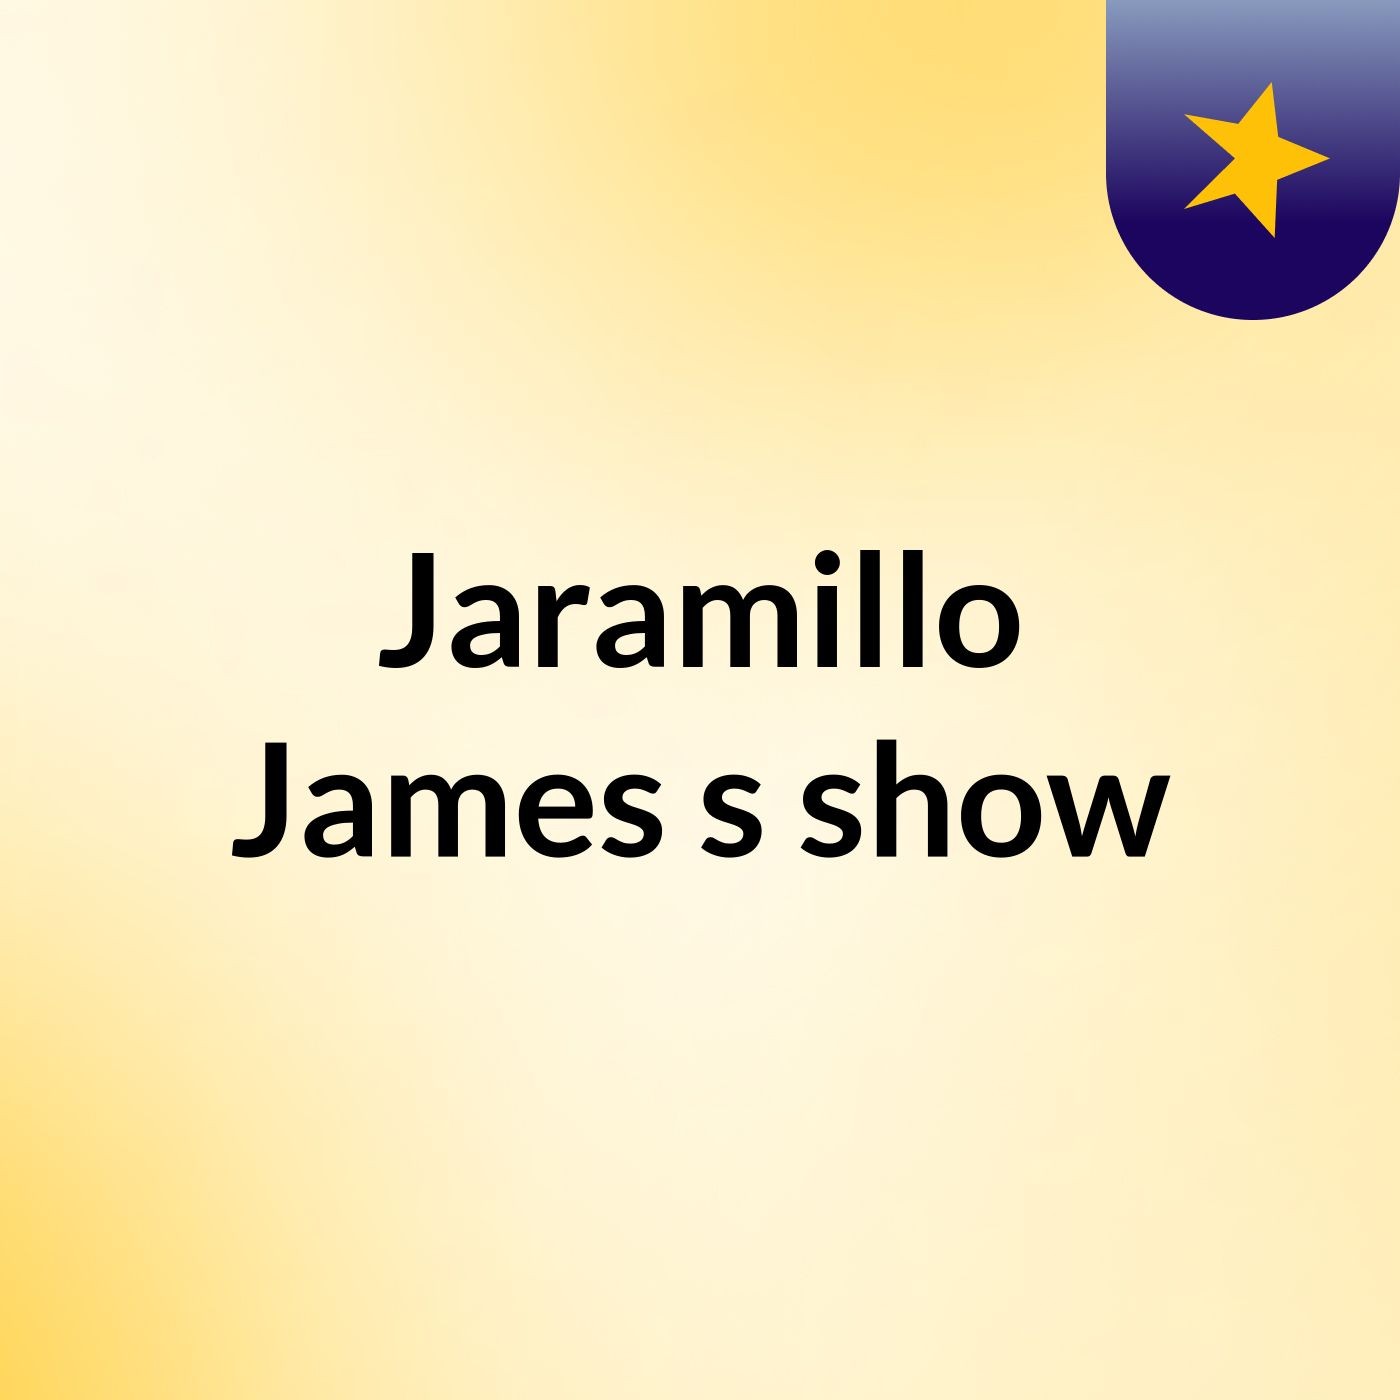 Jaramillo James's show